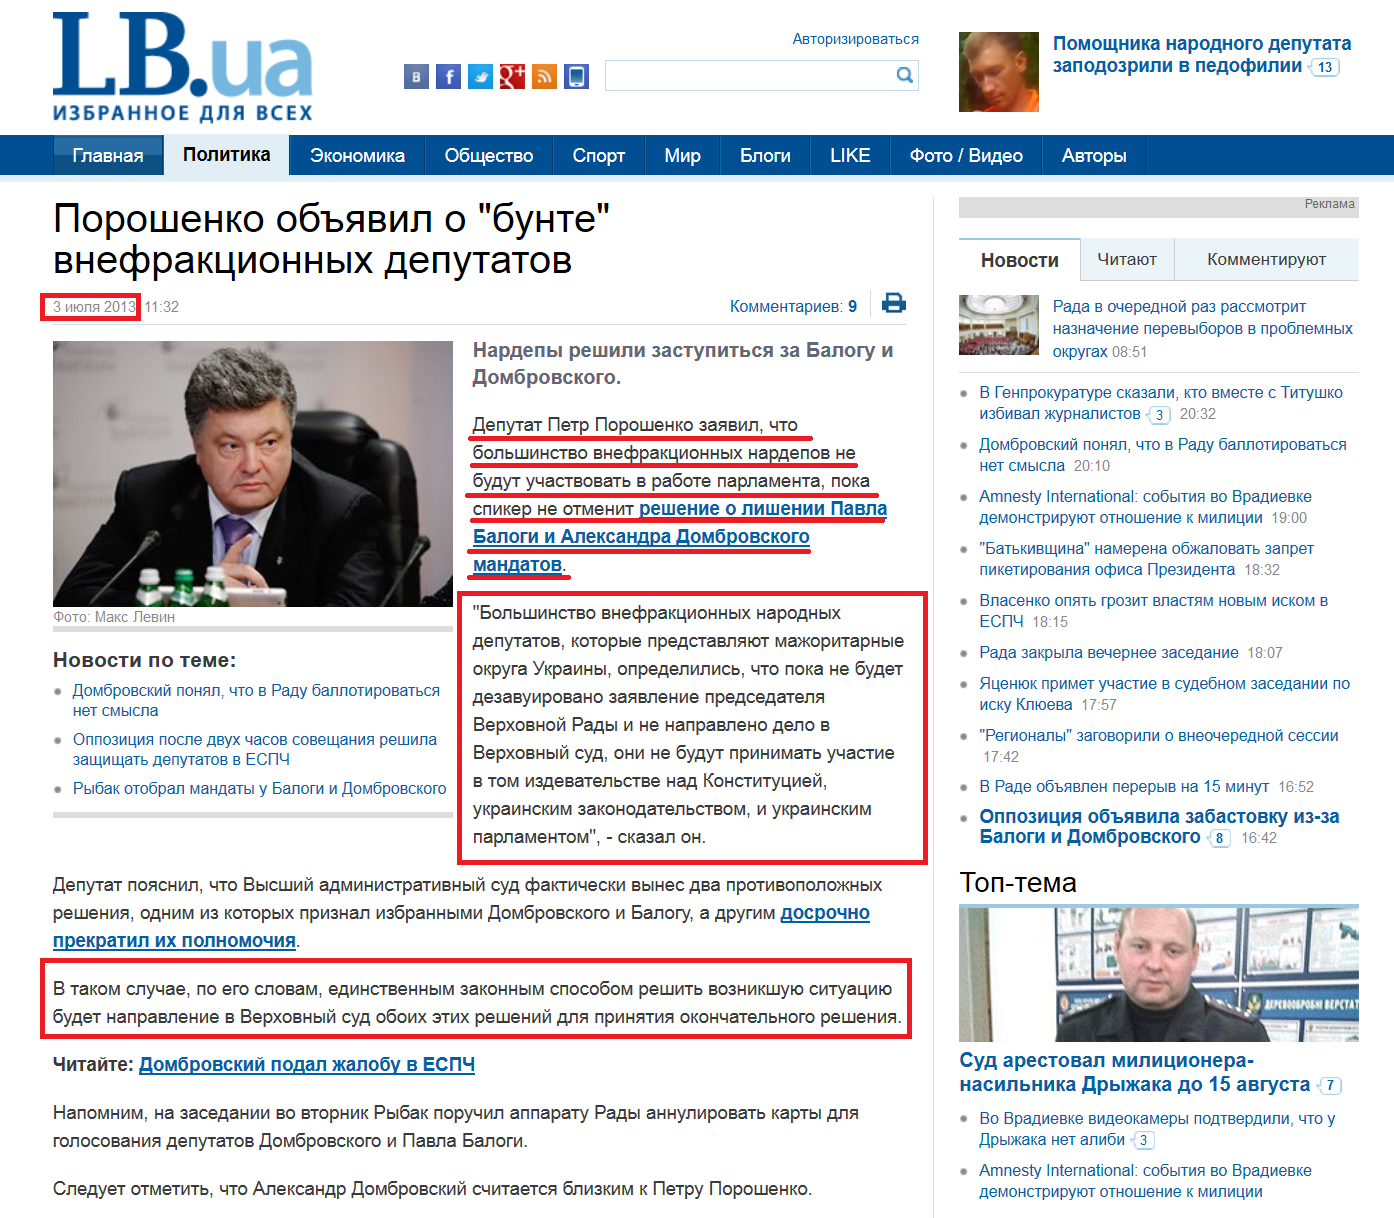 http://lb.ua/news/2013/07/03/210278_poroshenko_obyavil_bunte.html